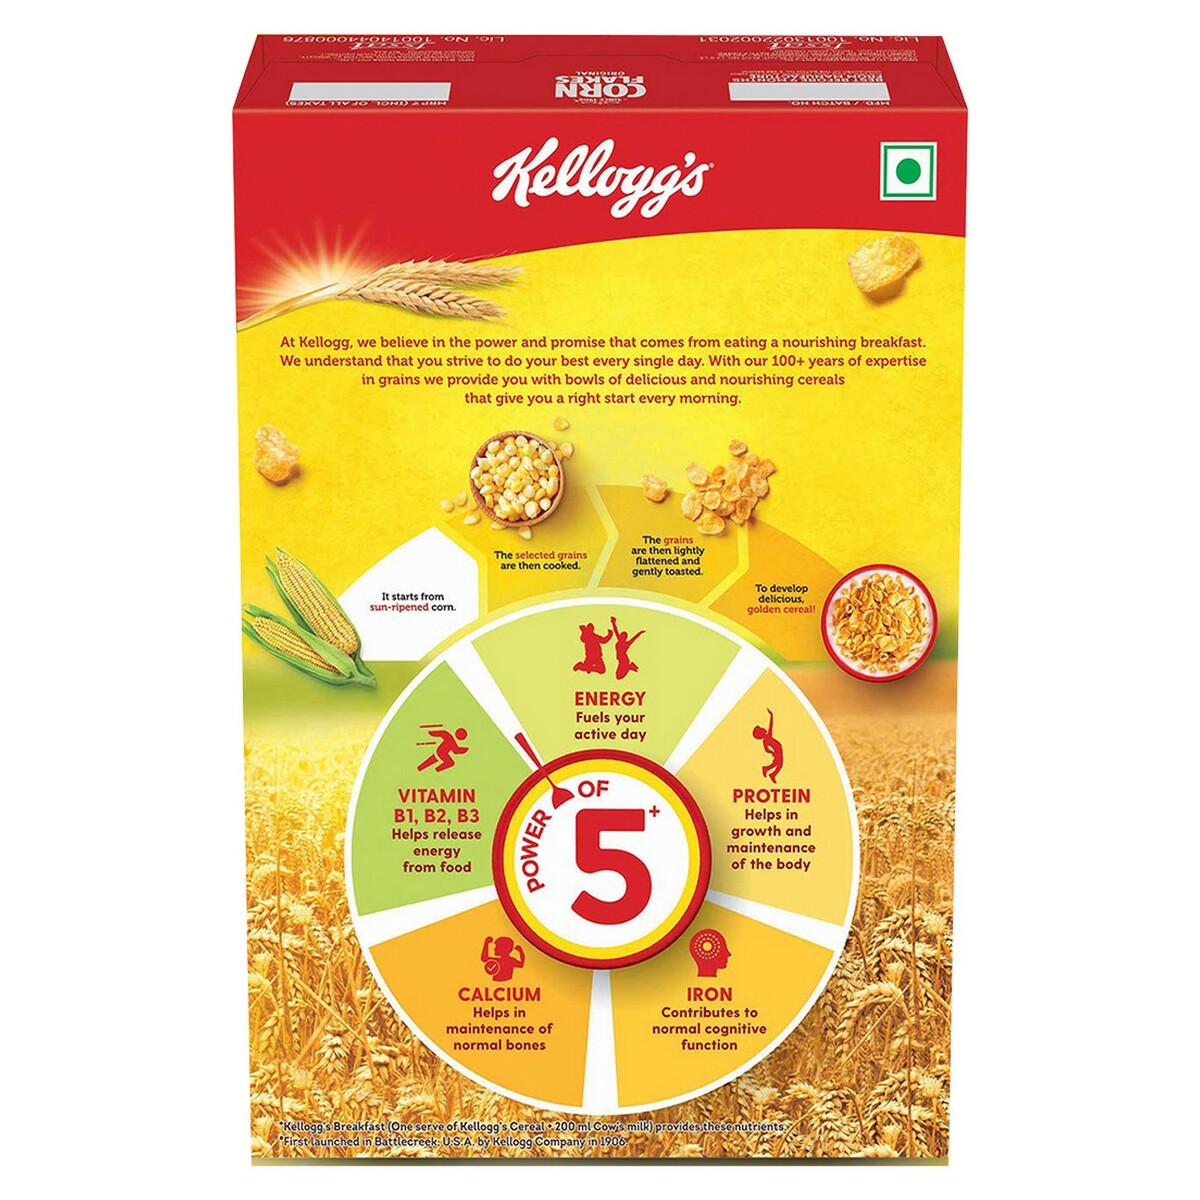 Kellogg's Corn Flakes Original & The Best  250g